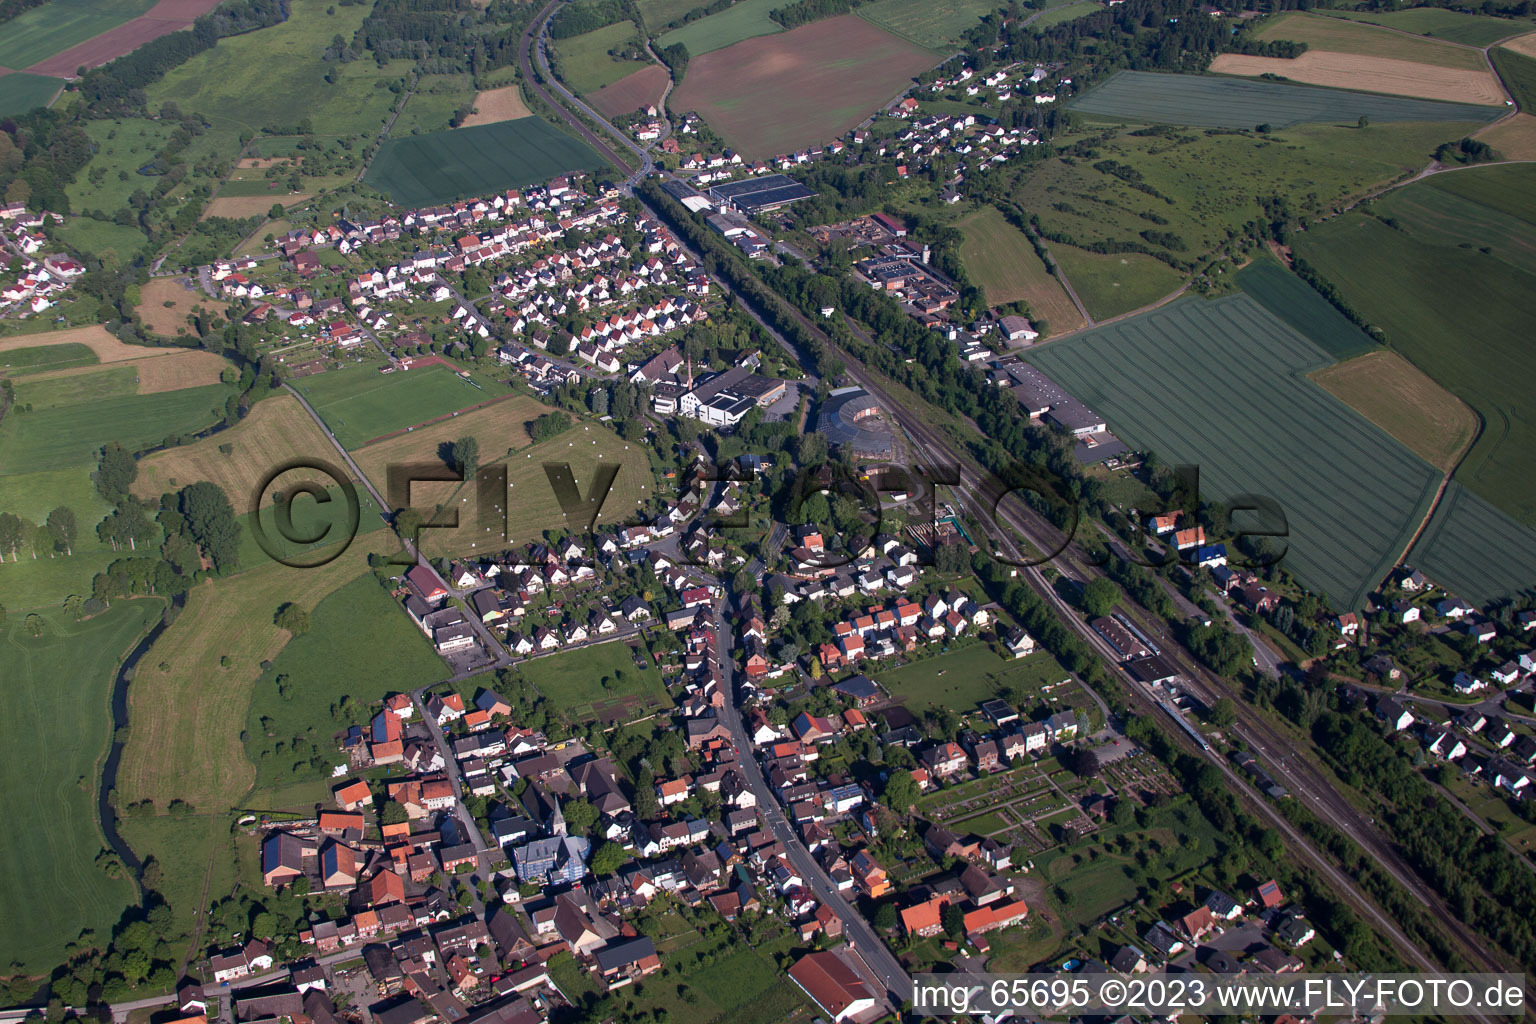 Aerial view of Ottbergen in the state North Rhine-Westphalia, Germany